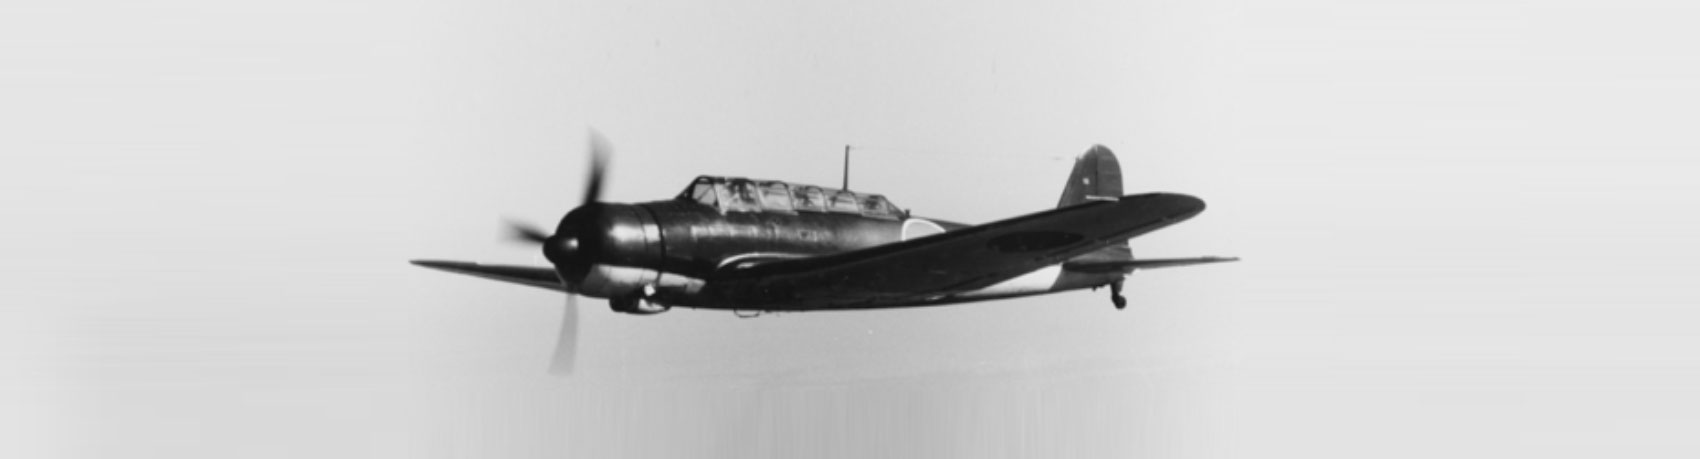 Nakajima B5N2 “Kate” Type 97-3 Carrier Attack Aircraft